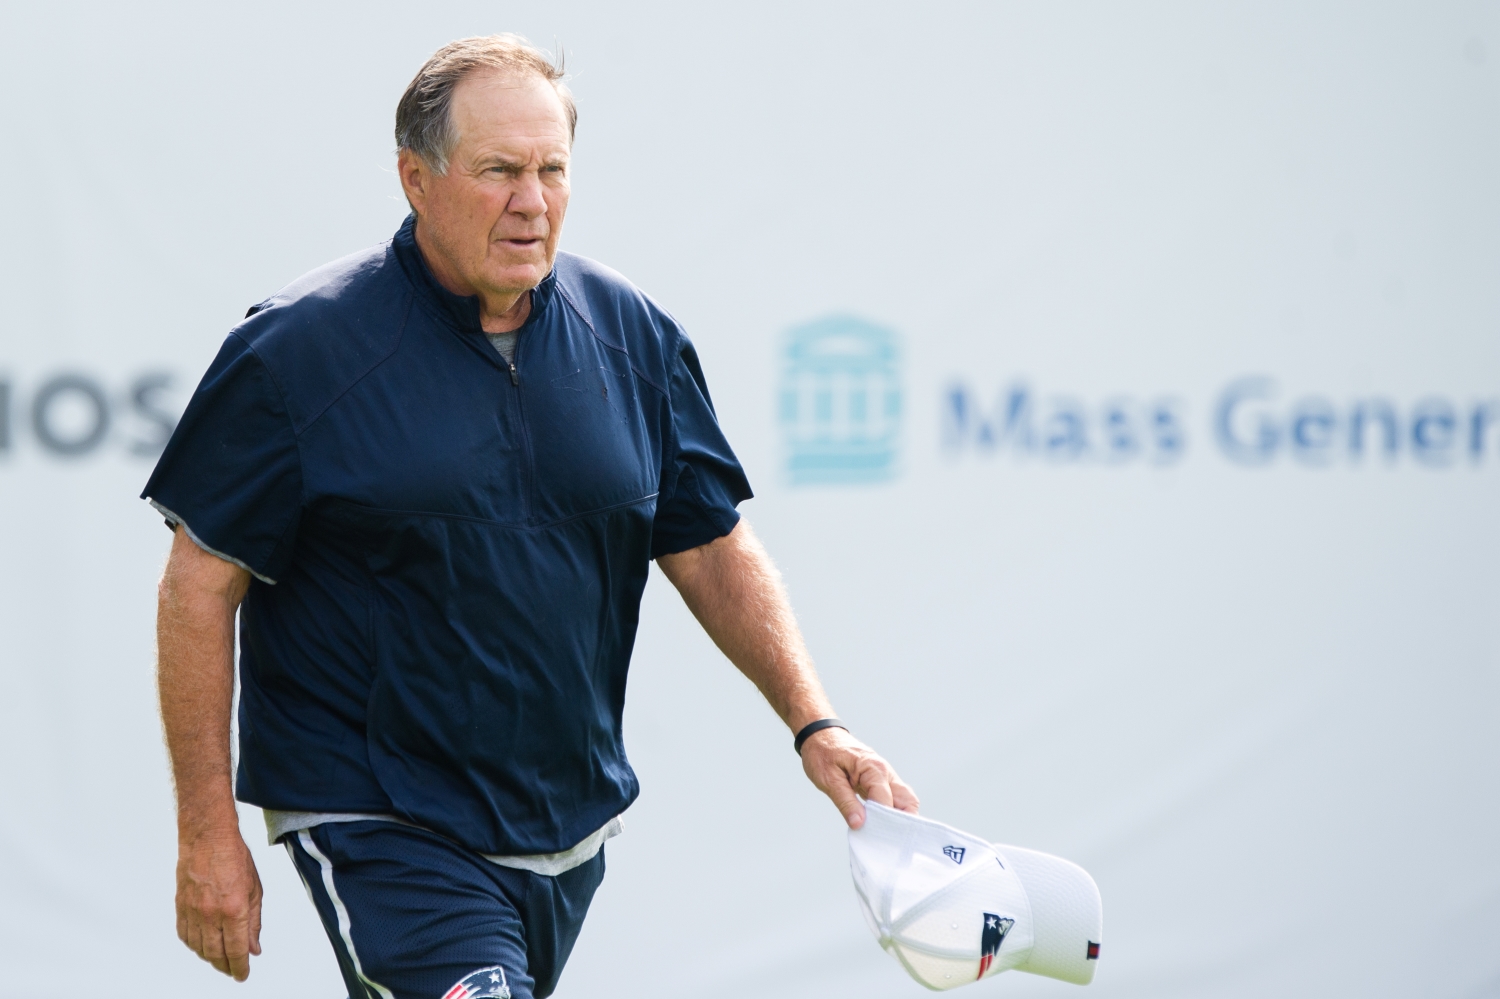 New England Patriots head coach Bill Belichick walks onto the field ahead of training camp.